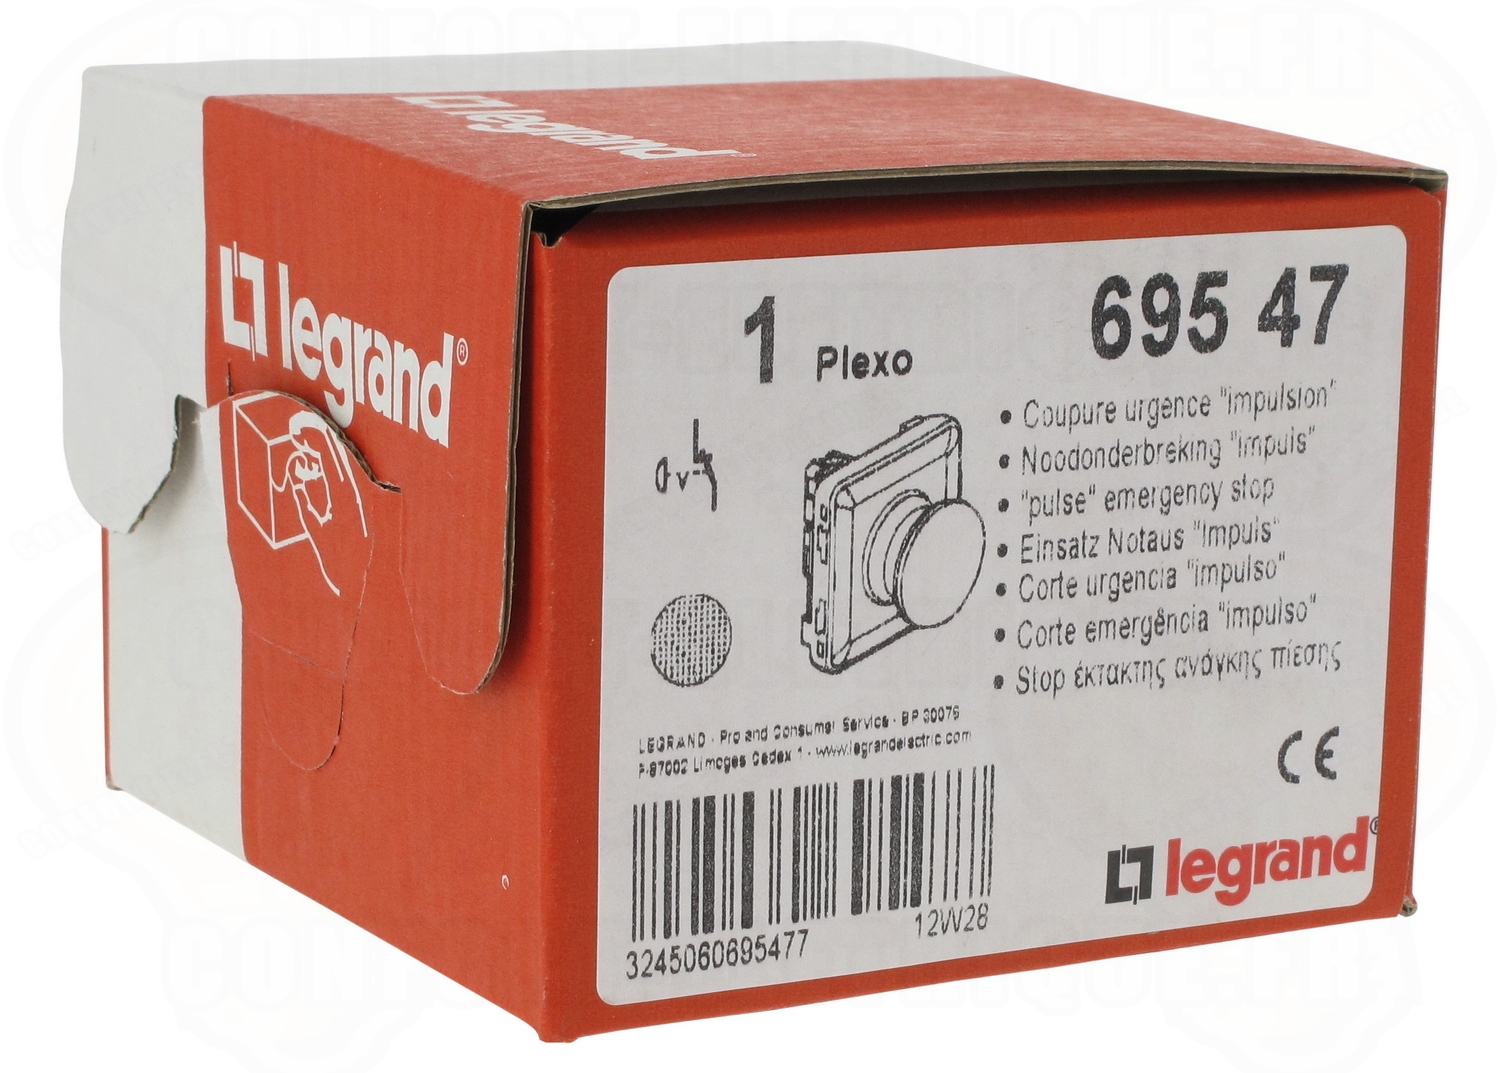 Bouton poussoir - Coup de poing - Legrand Plexo - 81,92€